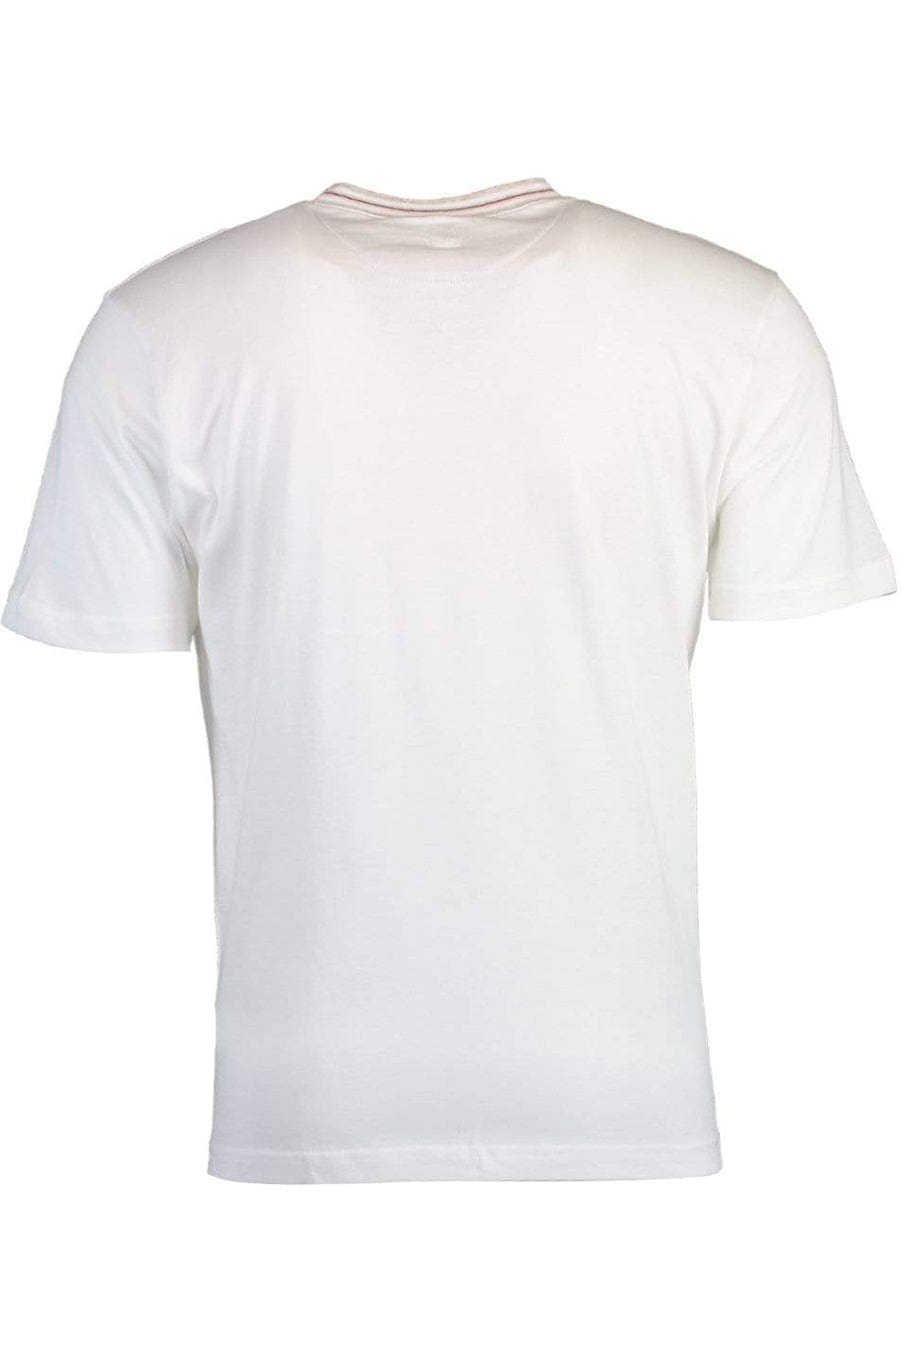 Bianco Round Neck Triangle Stitch T-Shirt MENSCLOTHINGTEE ELEVENTY   